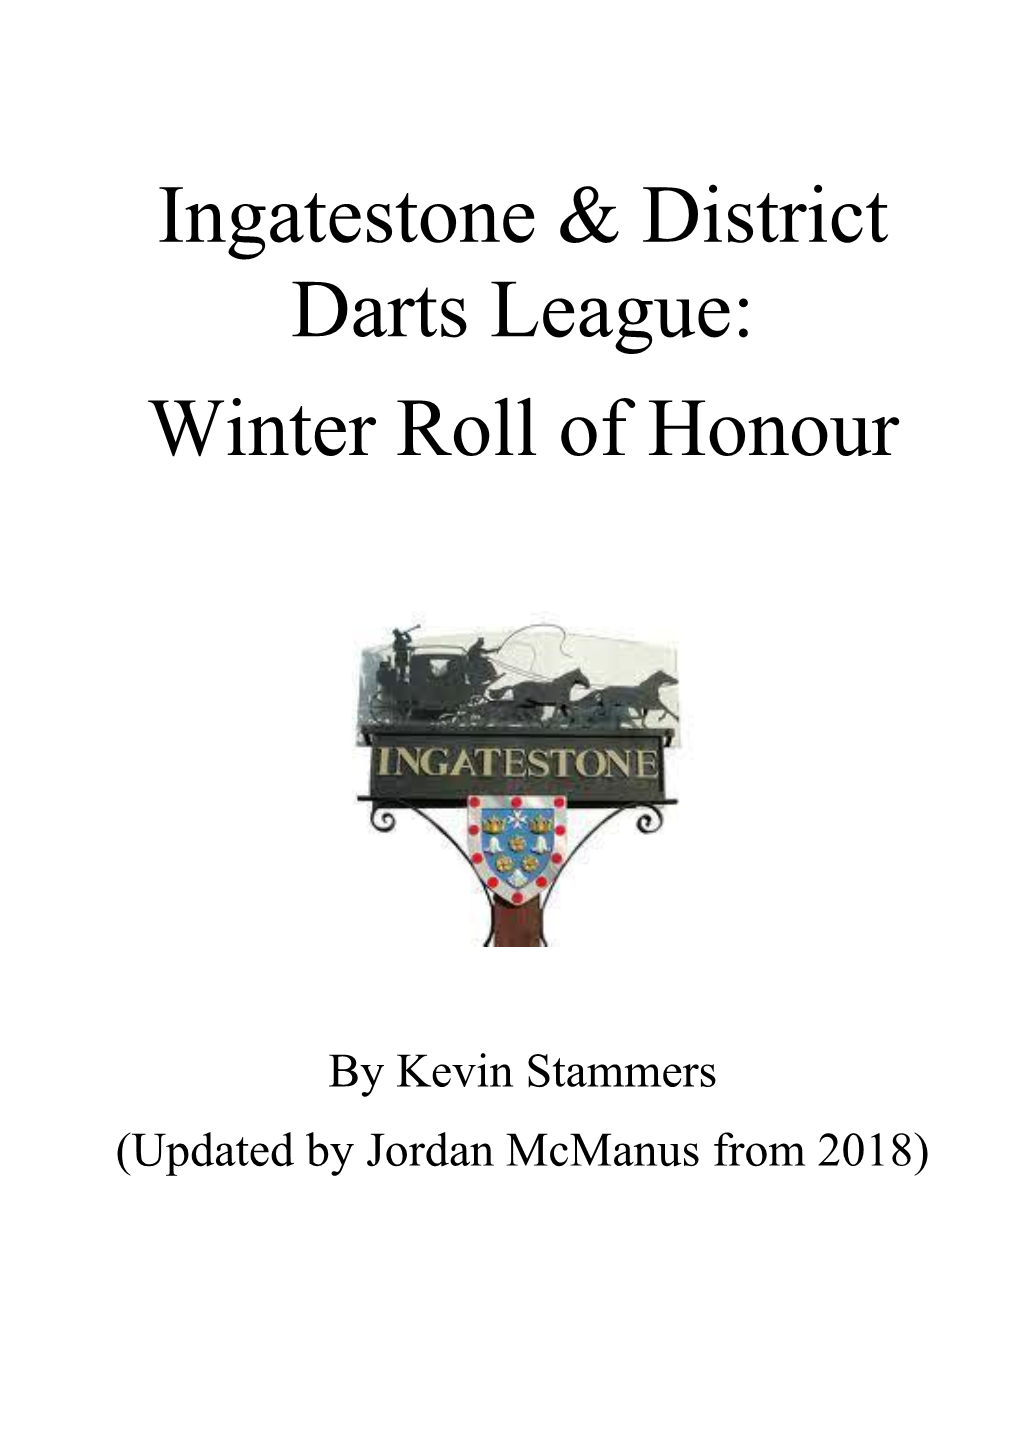 Ingatestone & District Darts League: Winter Roll of Honour